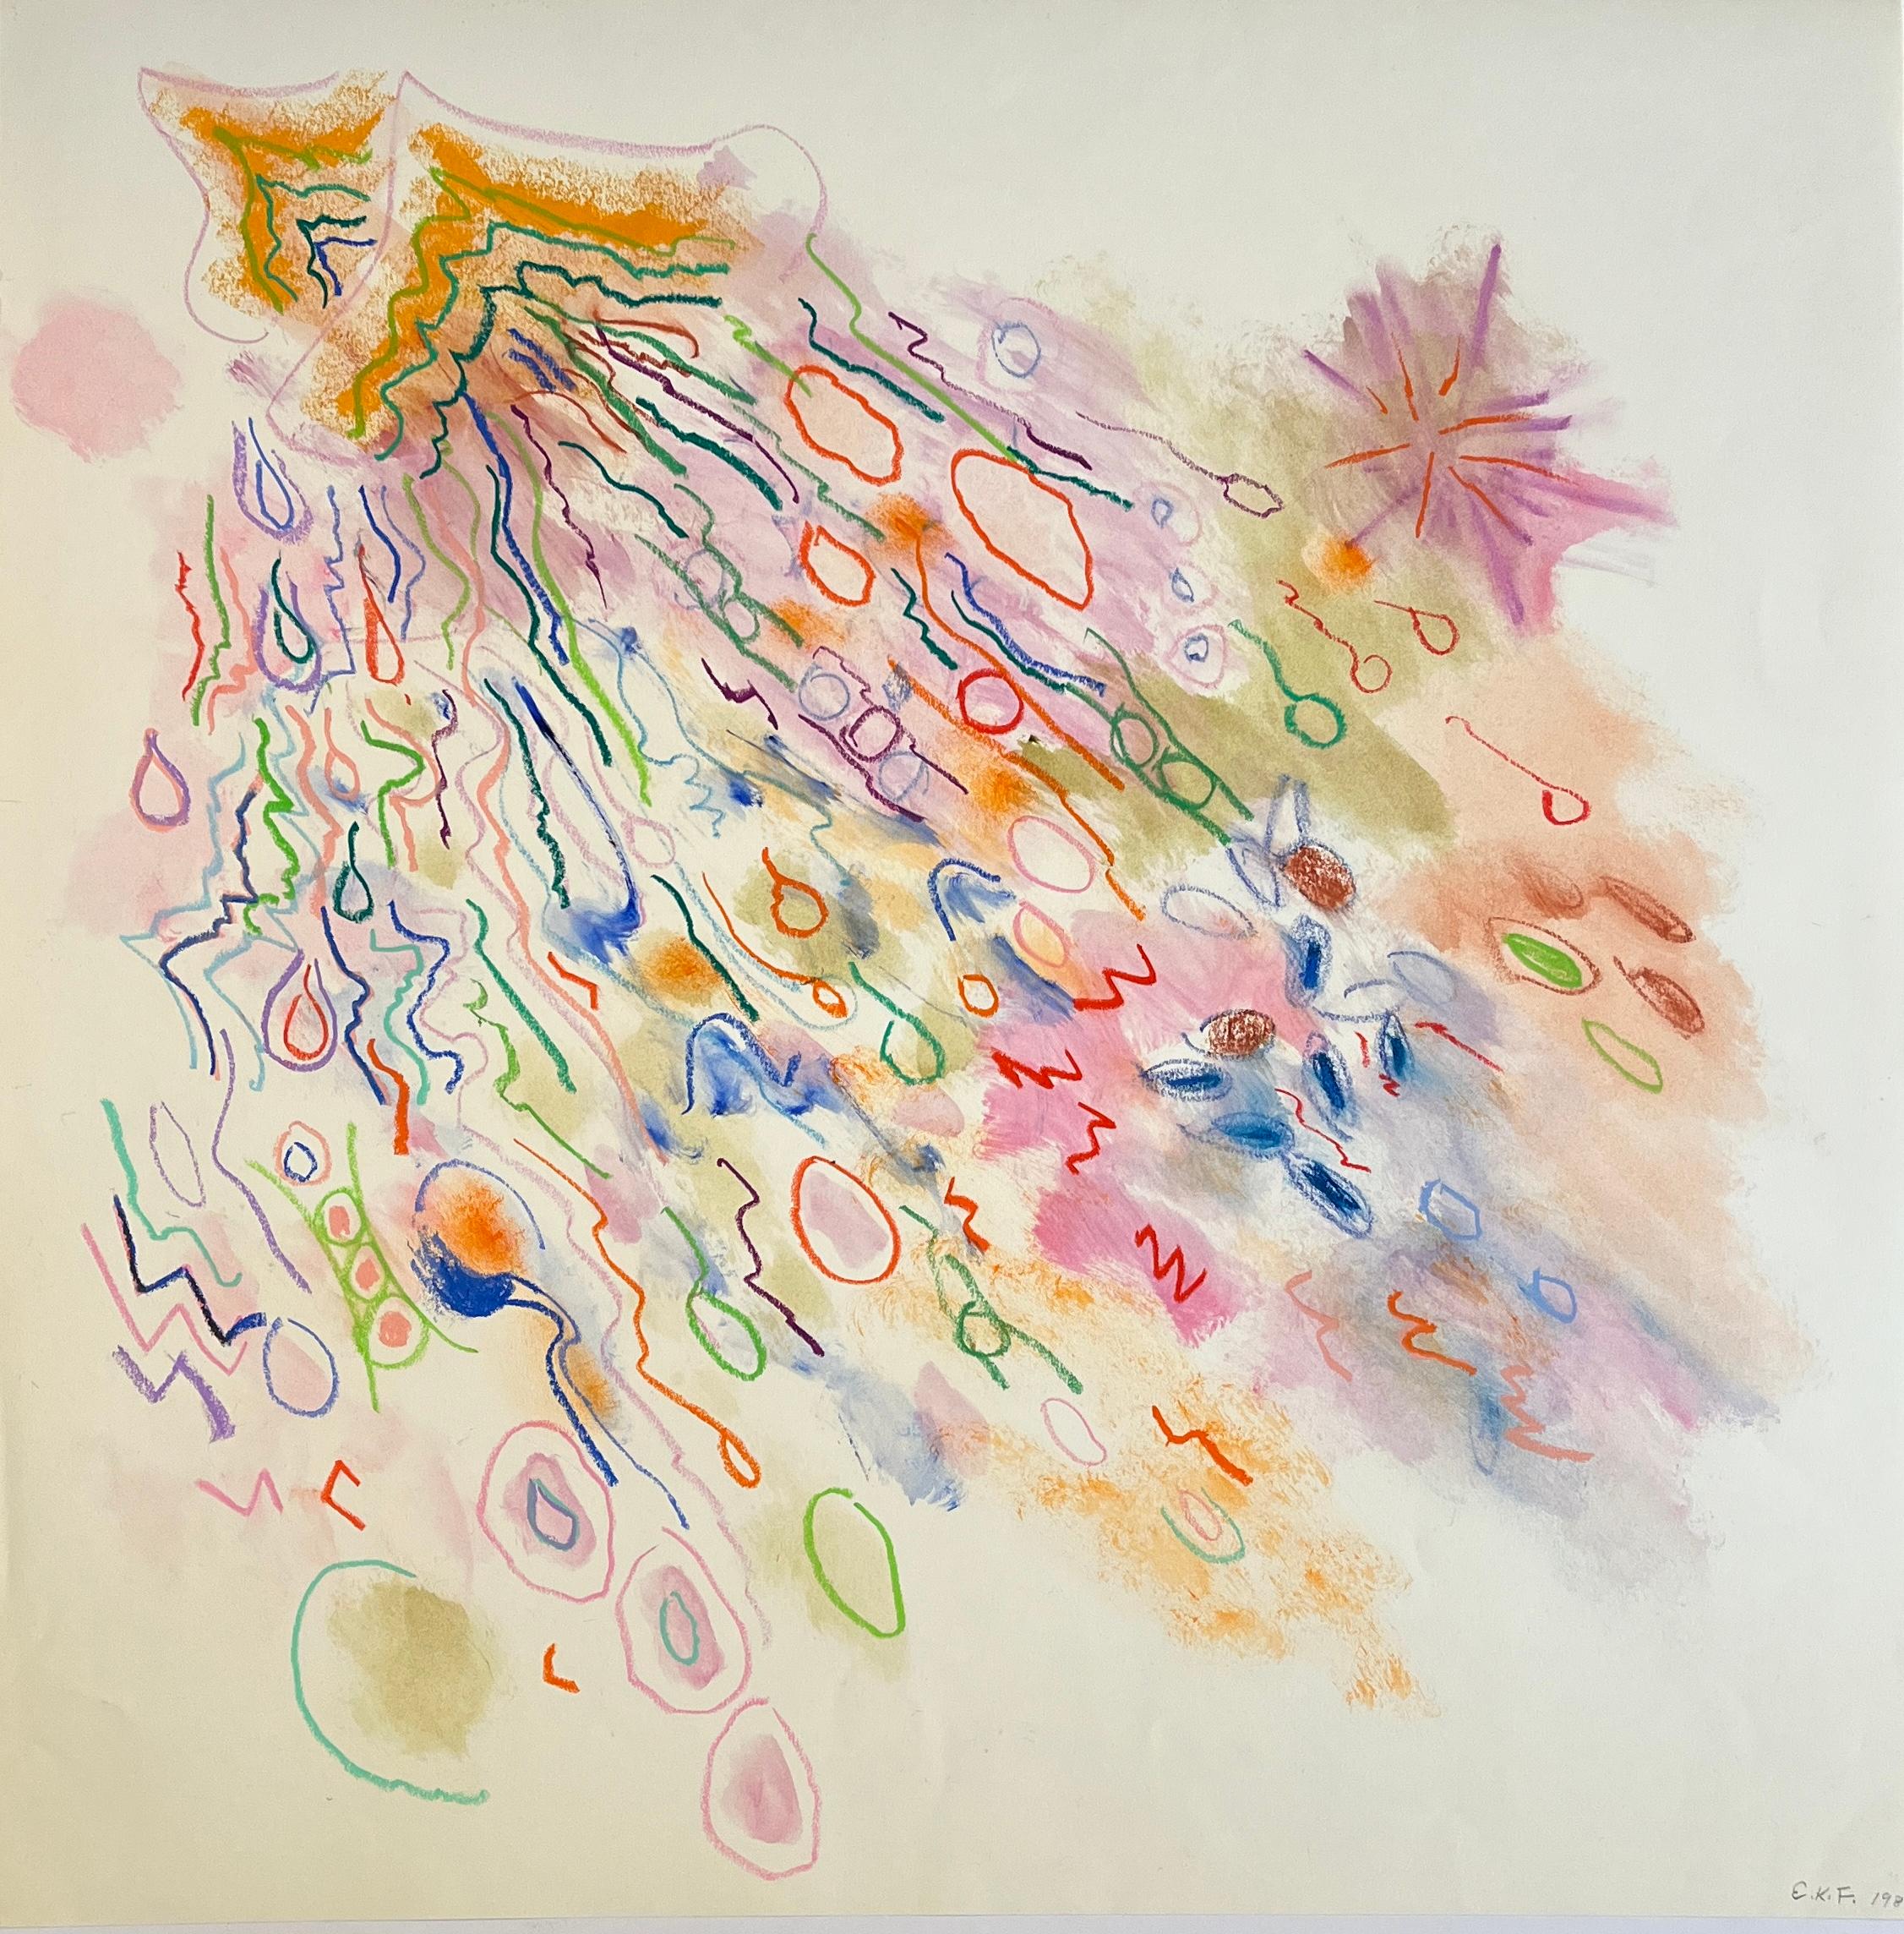 1988 "Shooting Star" Watercolor and Pastel Abstract Drawing